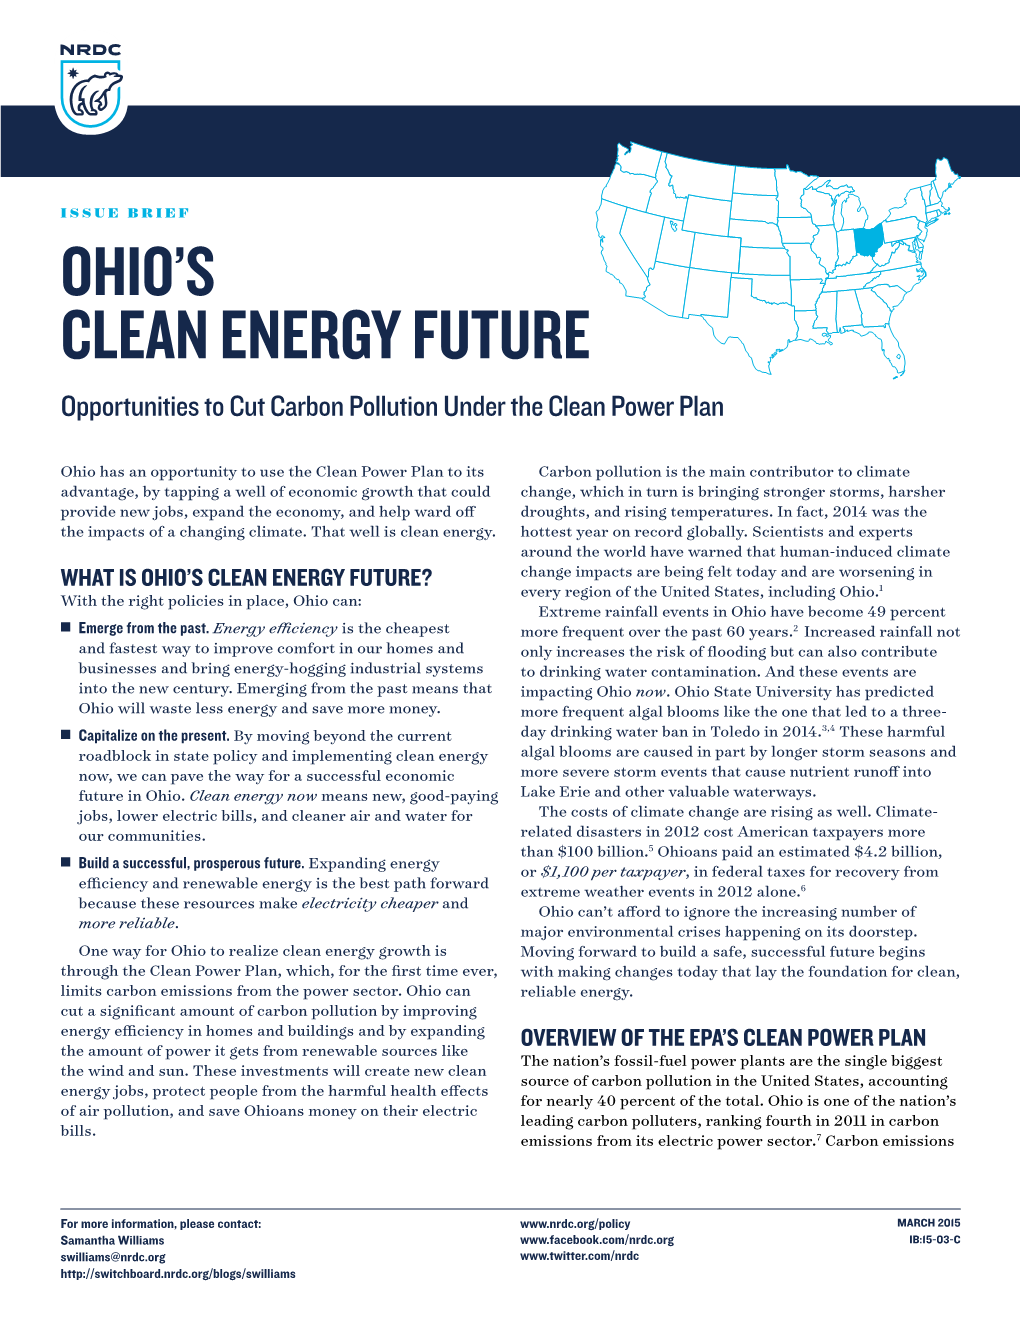 Ohio's Clean Energy Future (Pdf)